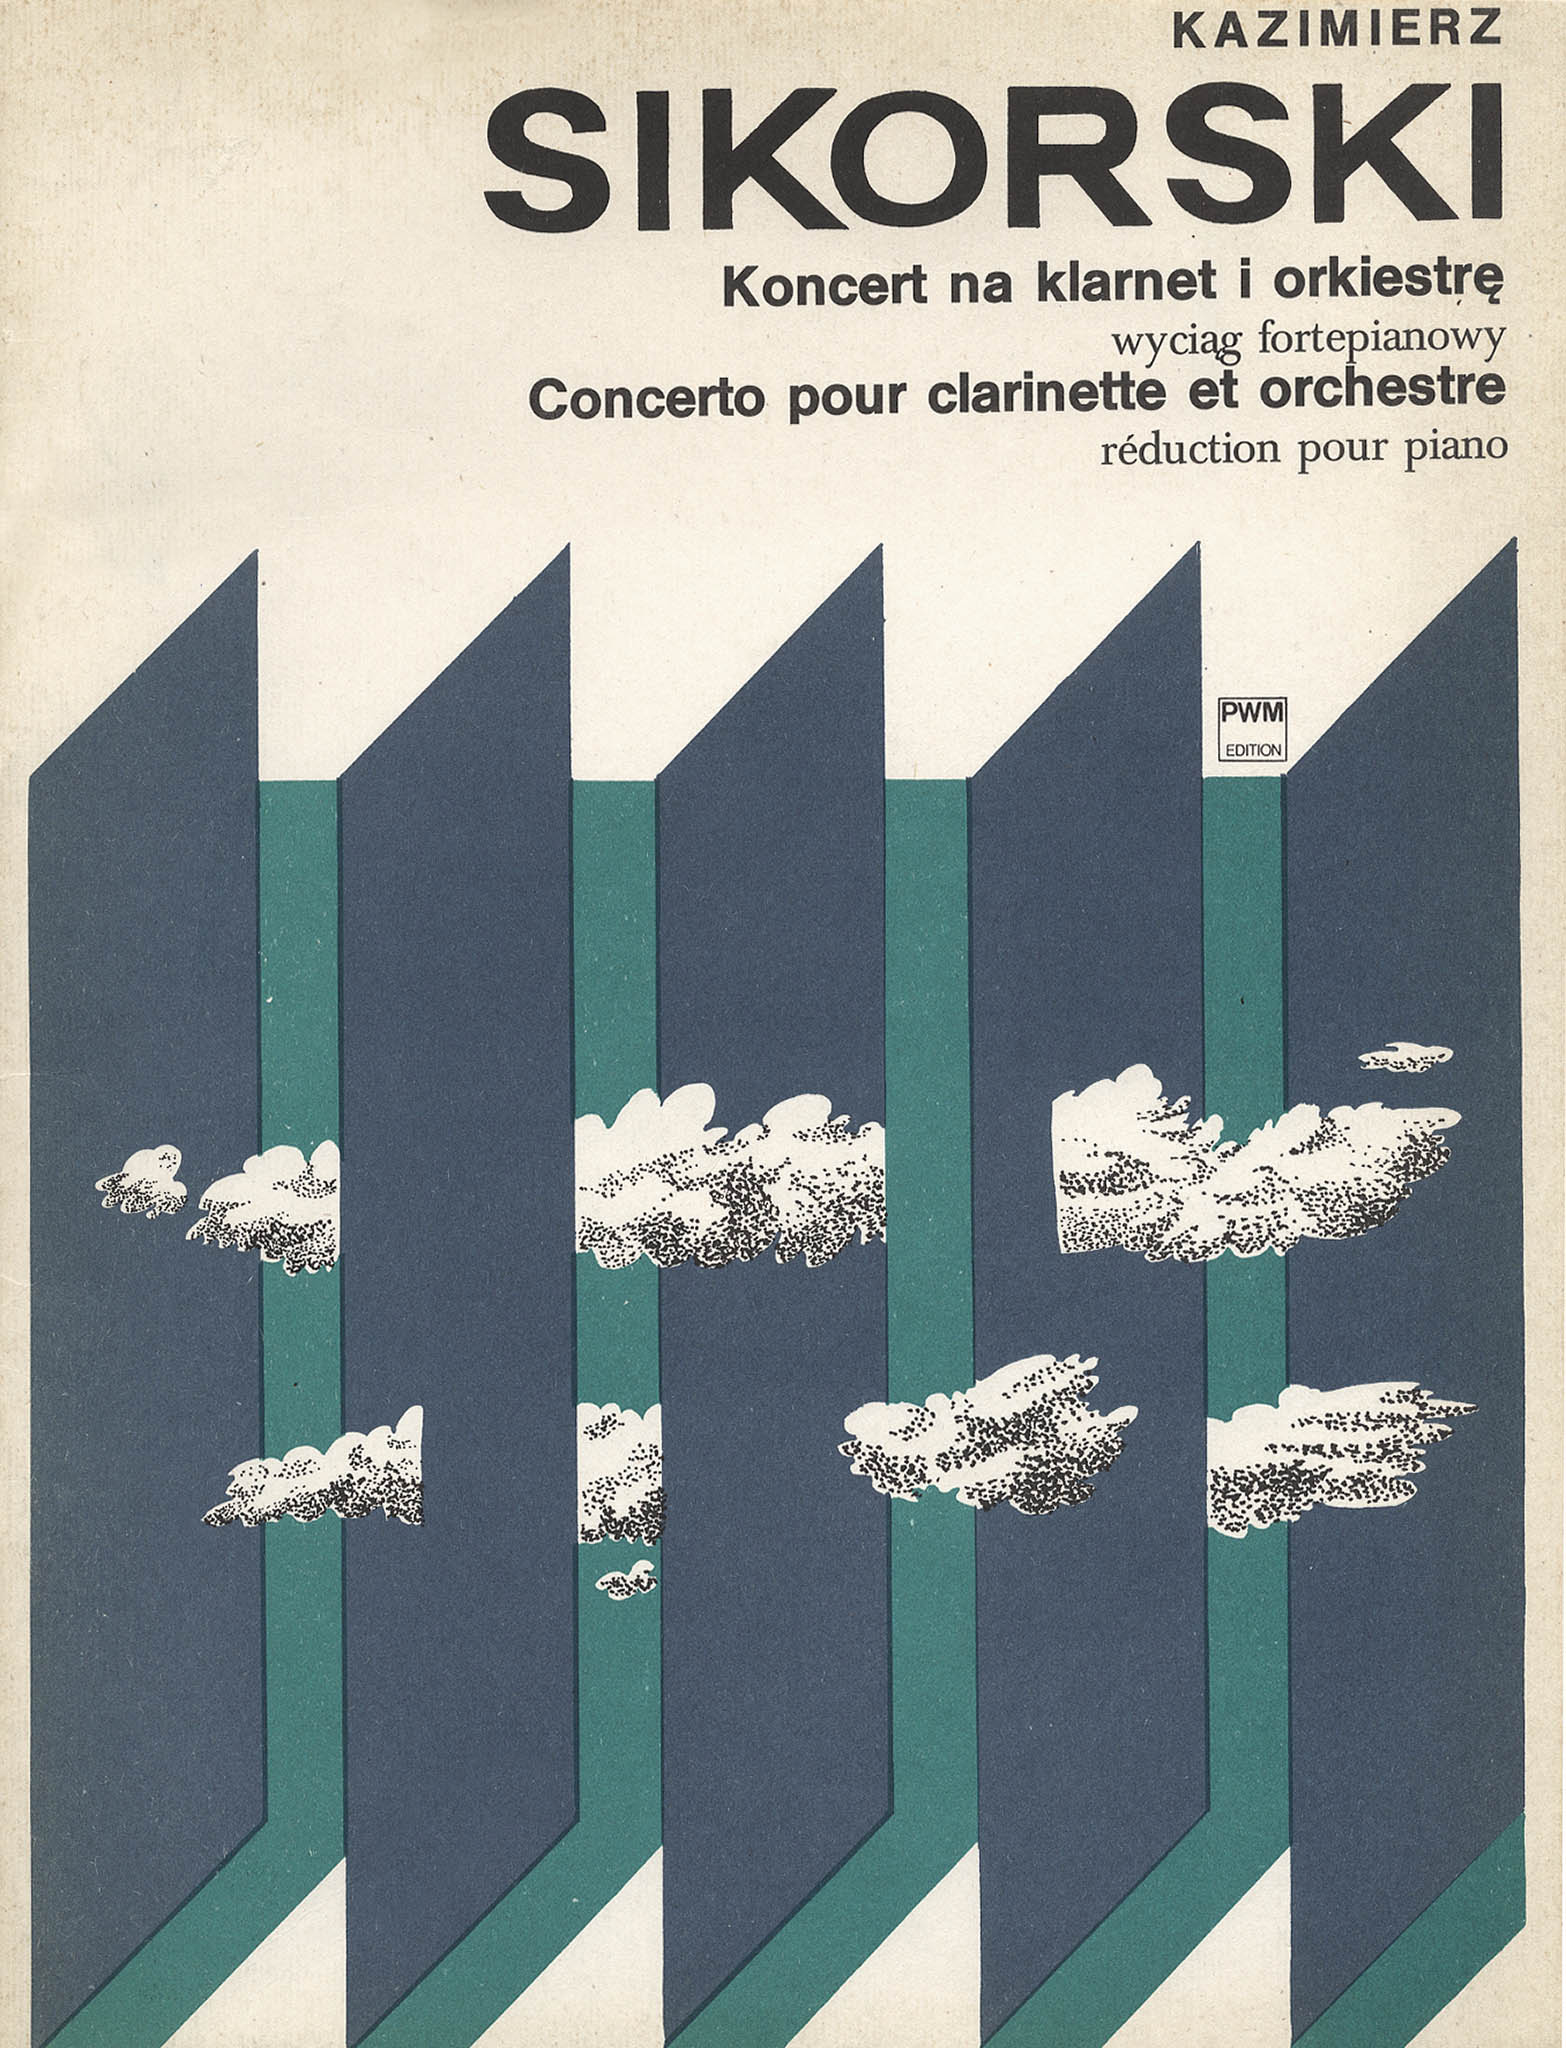 Kazimierz Sikorski Clarinet Concerto piano reduction cover